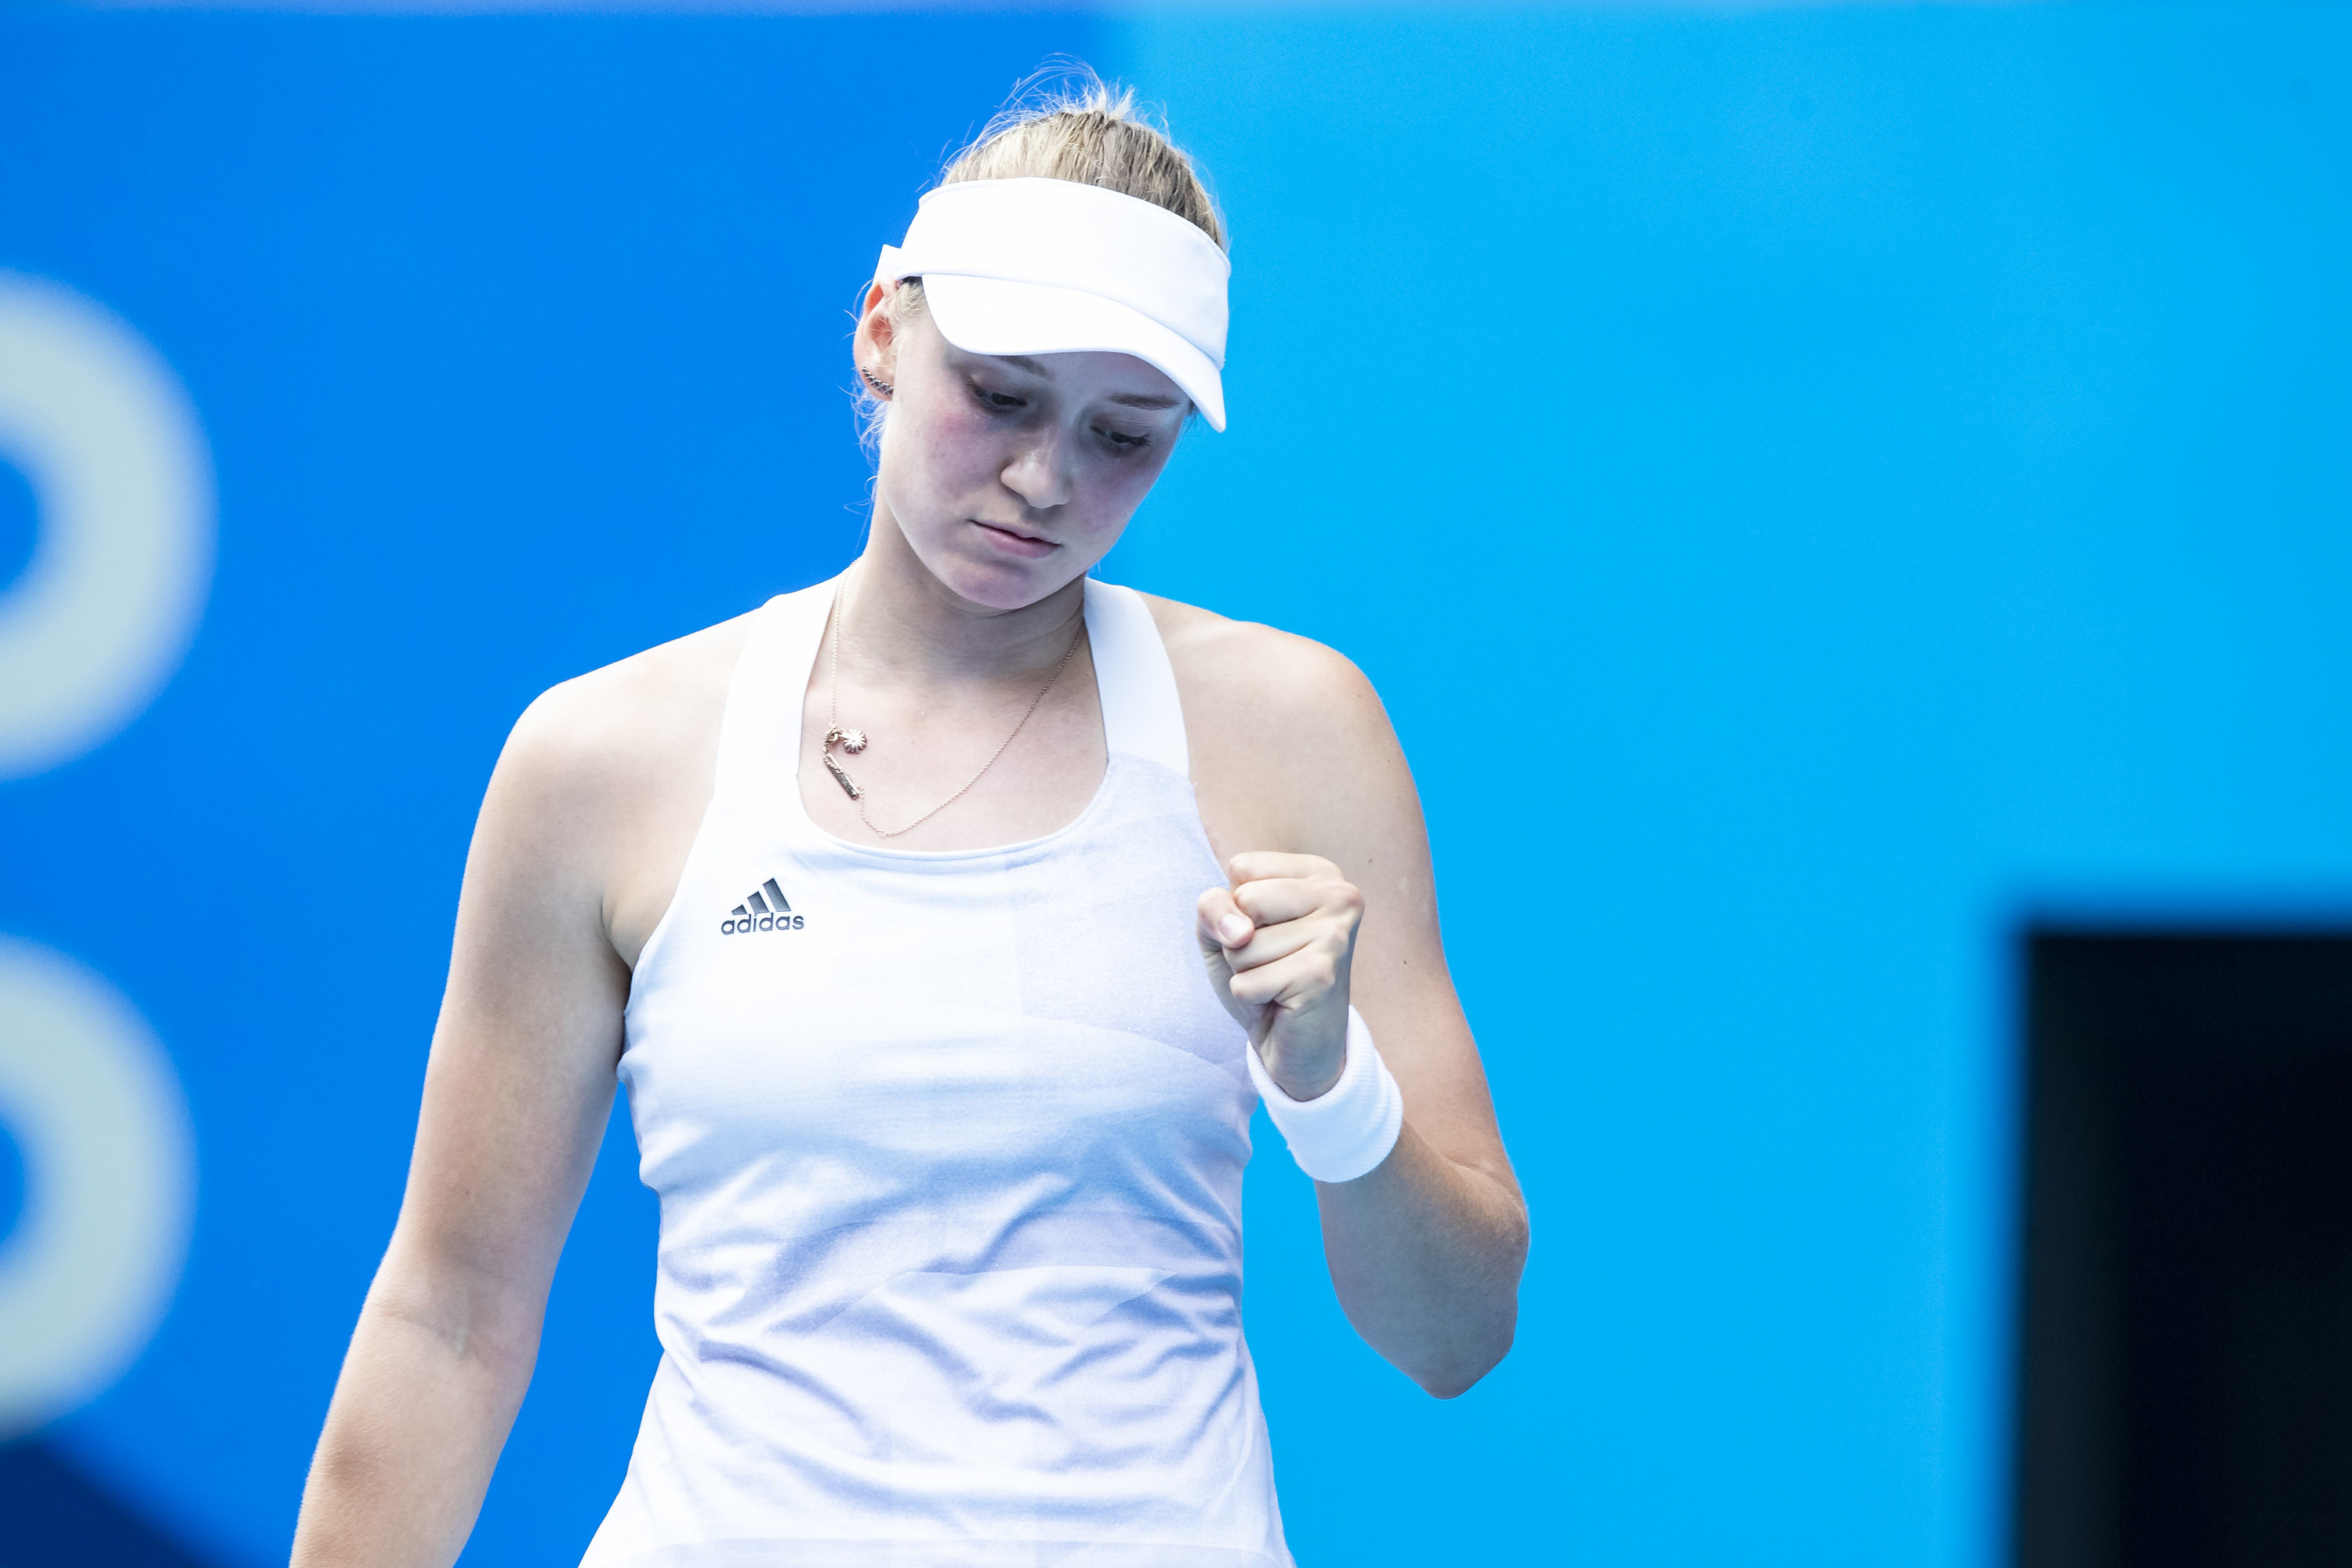 Kazakh tennis player pumping their fist